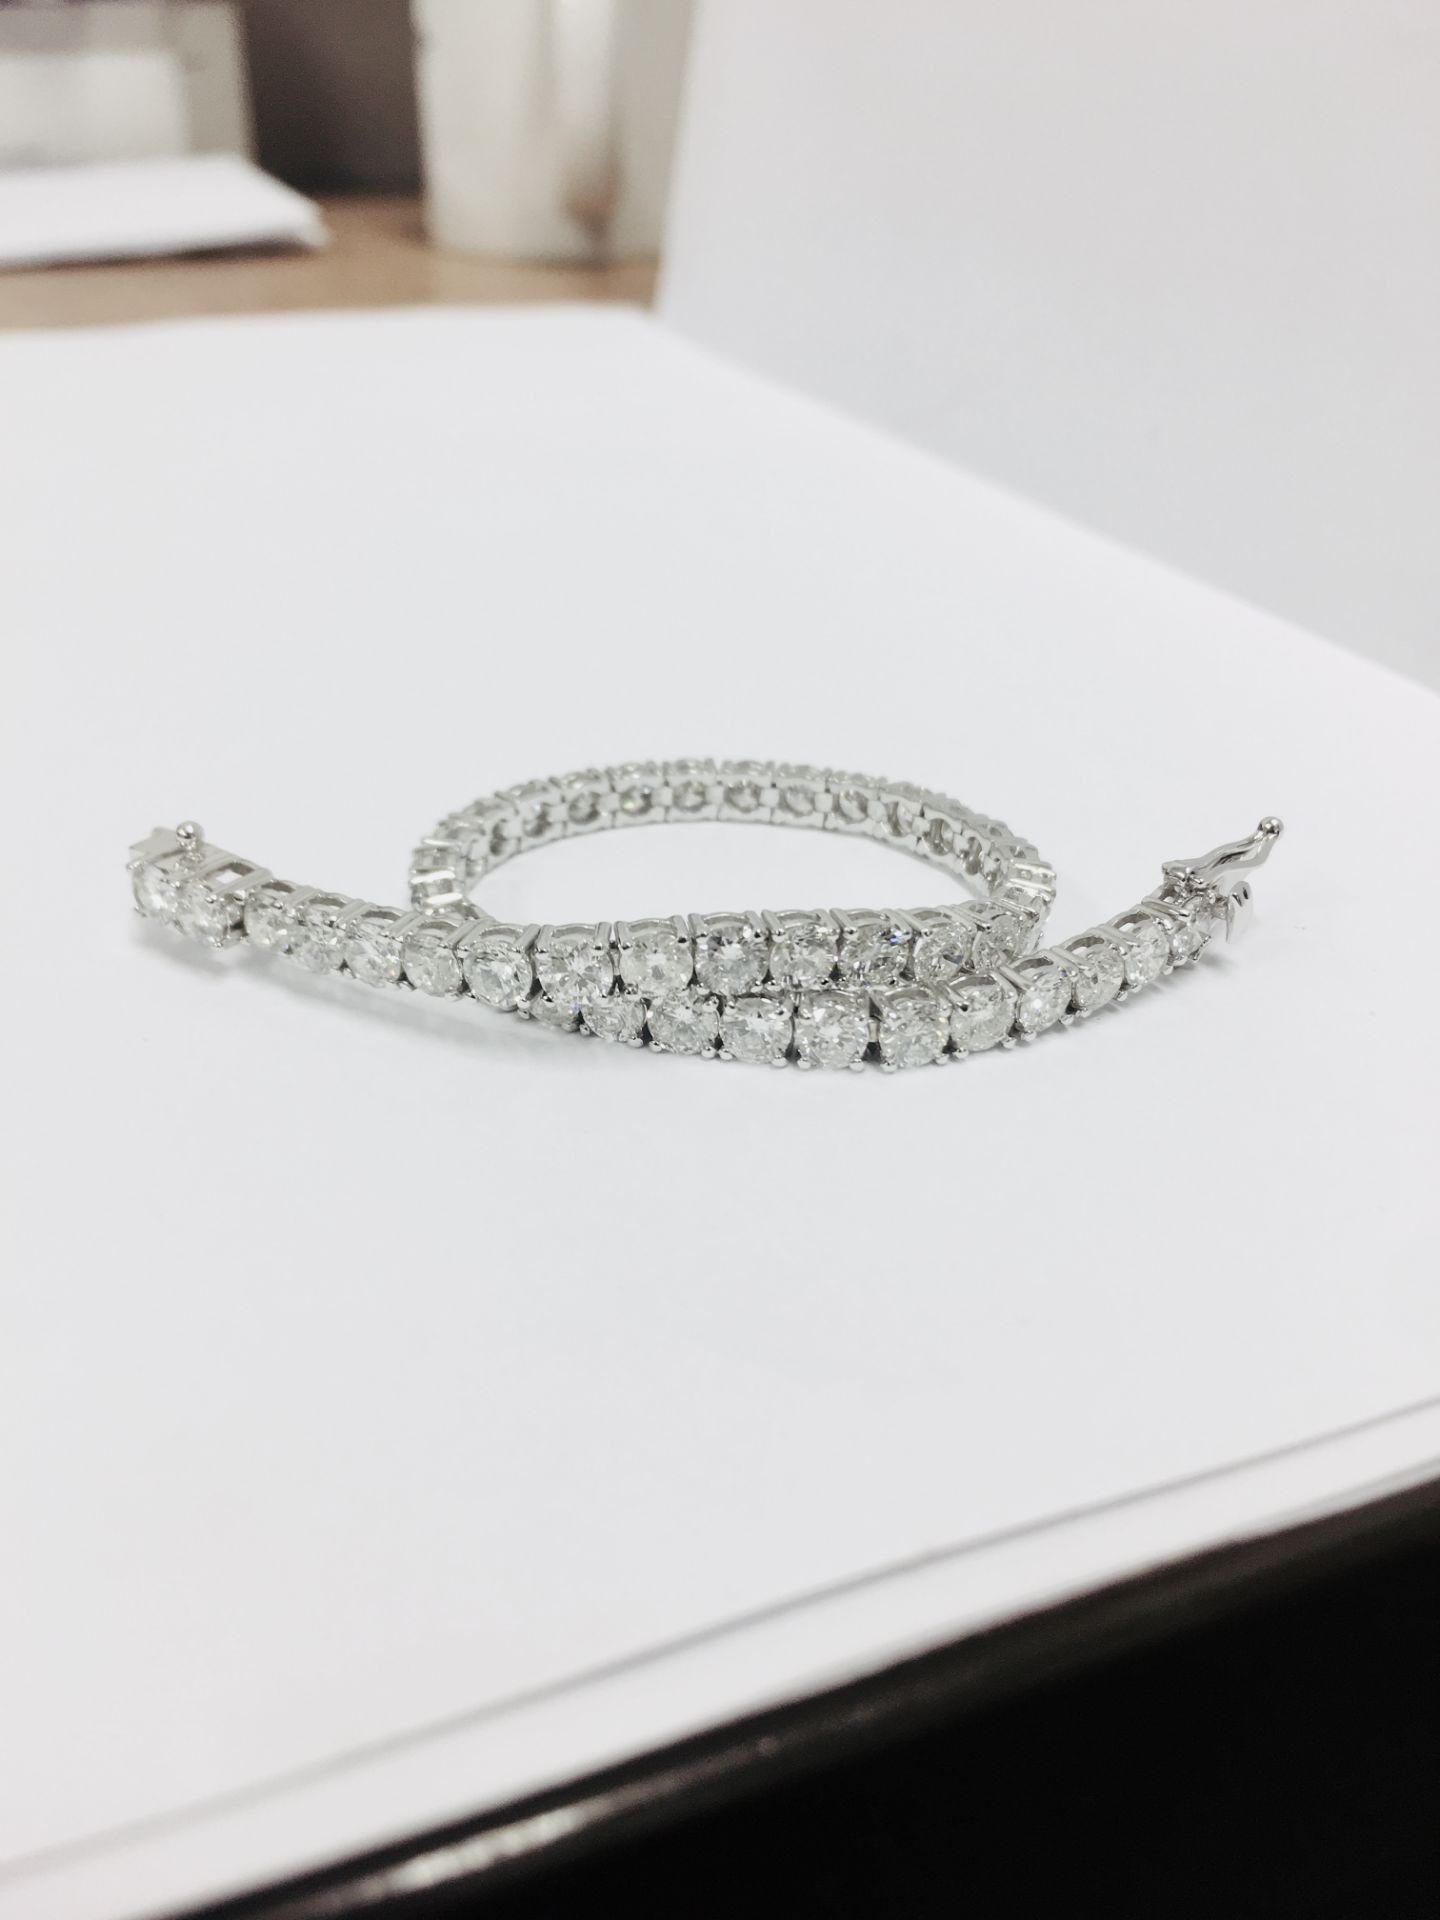 10.00ct Diamond tennis bracelet set with brilliant cut diamonds of I/J colour, si2-3 clarity. All - Image 3 of 6